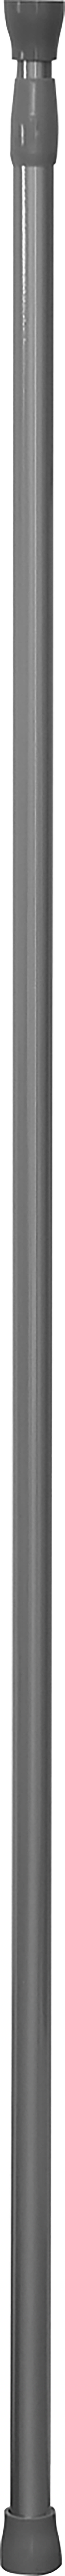 Barre de douche aluminium 135-250 cm - chrome